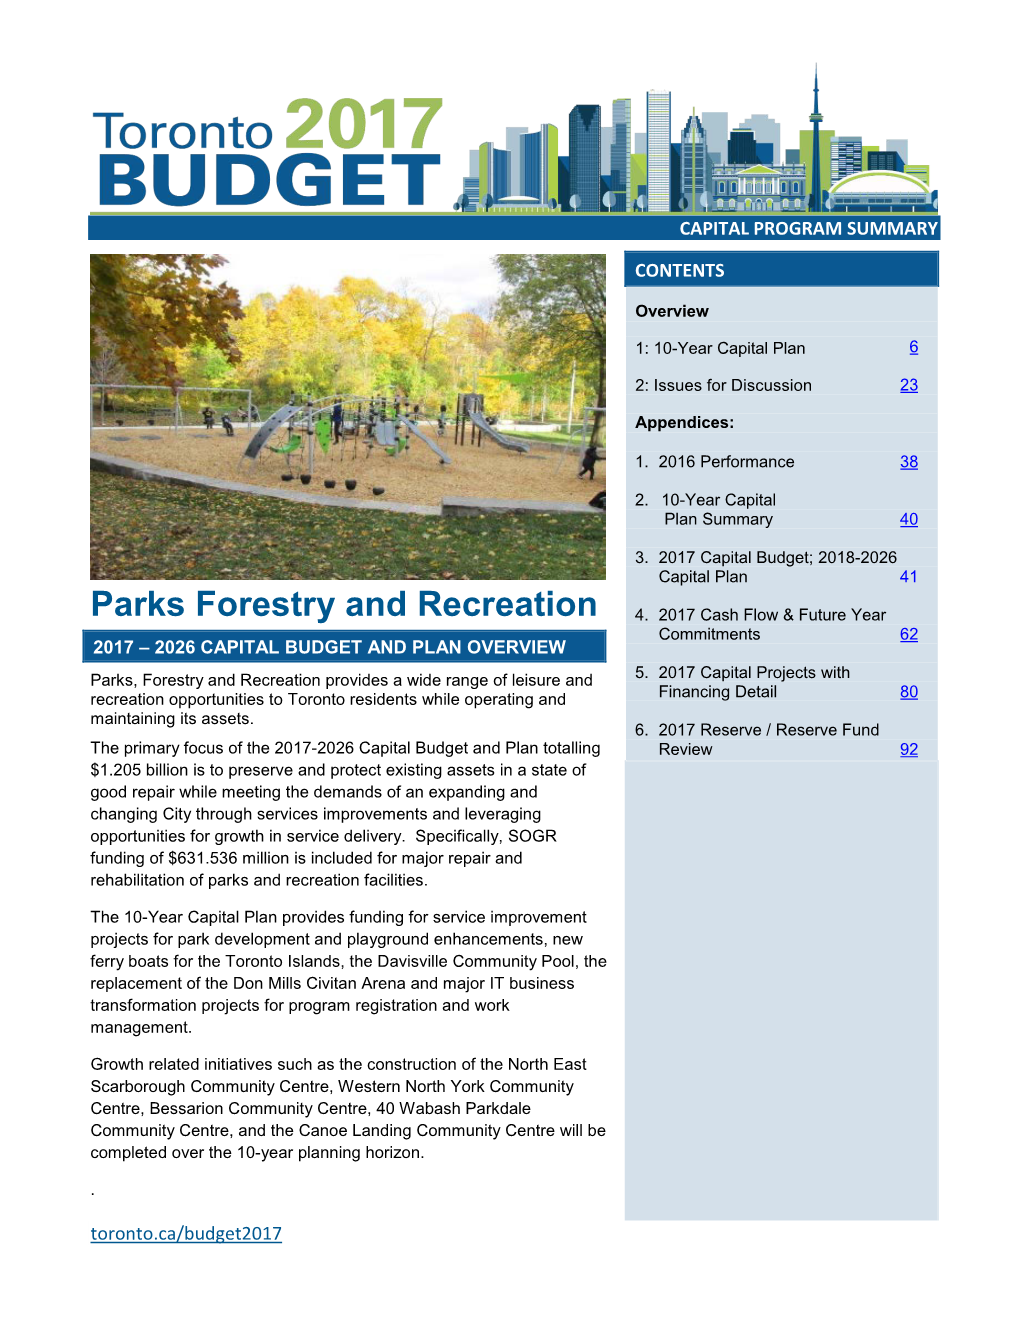 Capital Budget; 2018-2026 Capital Plan 41